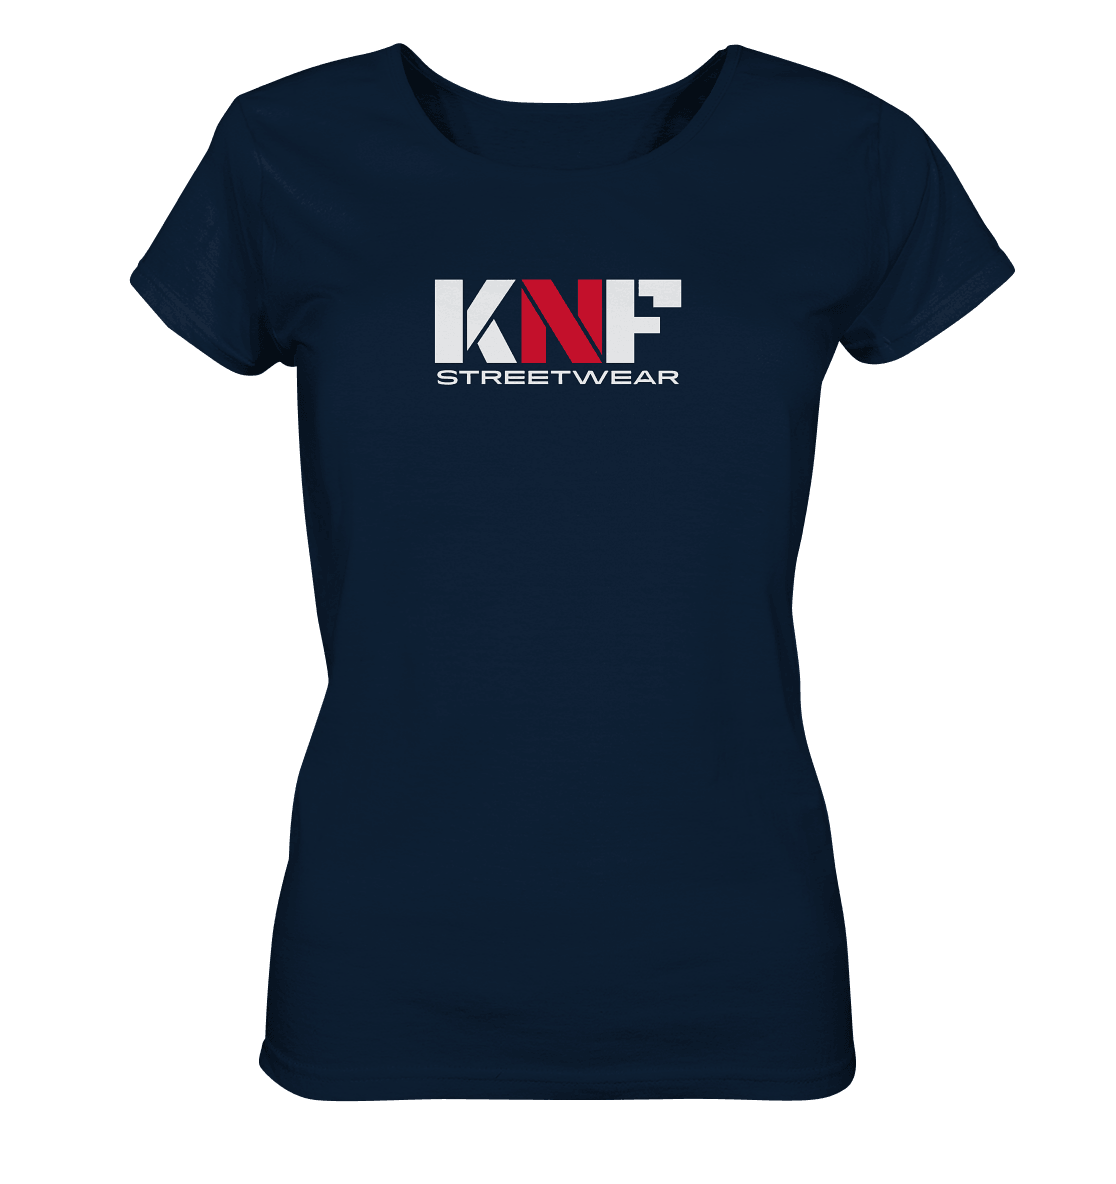 KNF "BIG LETTER" - Ladies Organic Shirt - Snapshirts